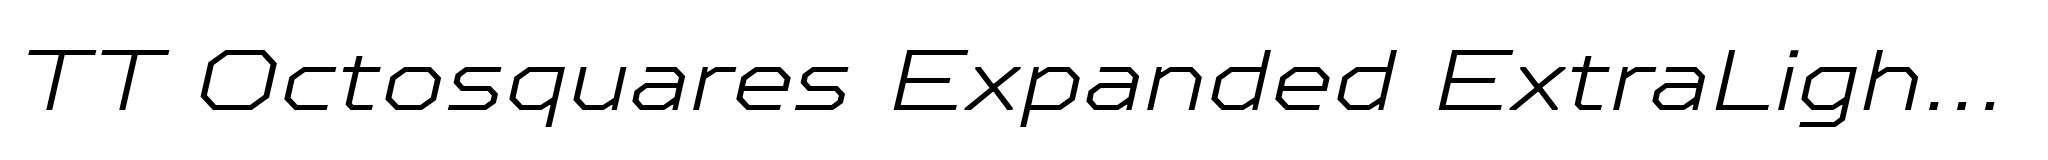 TT Octosquares Expanded ExtraLight Italic image